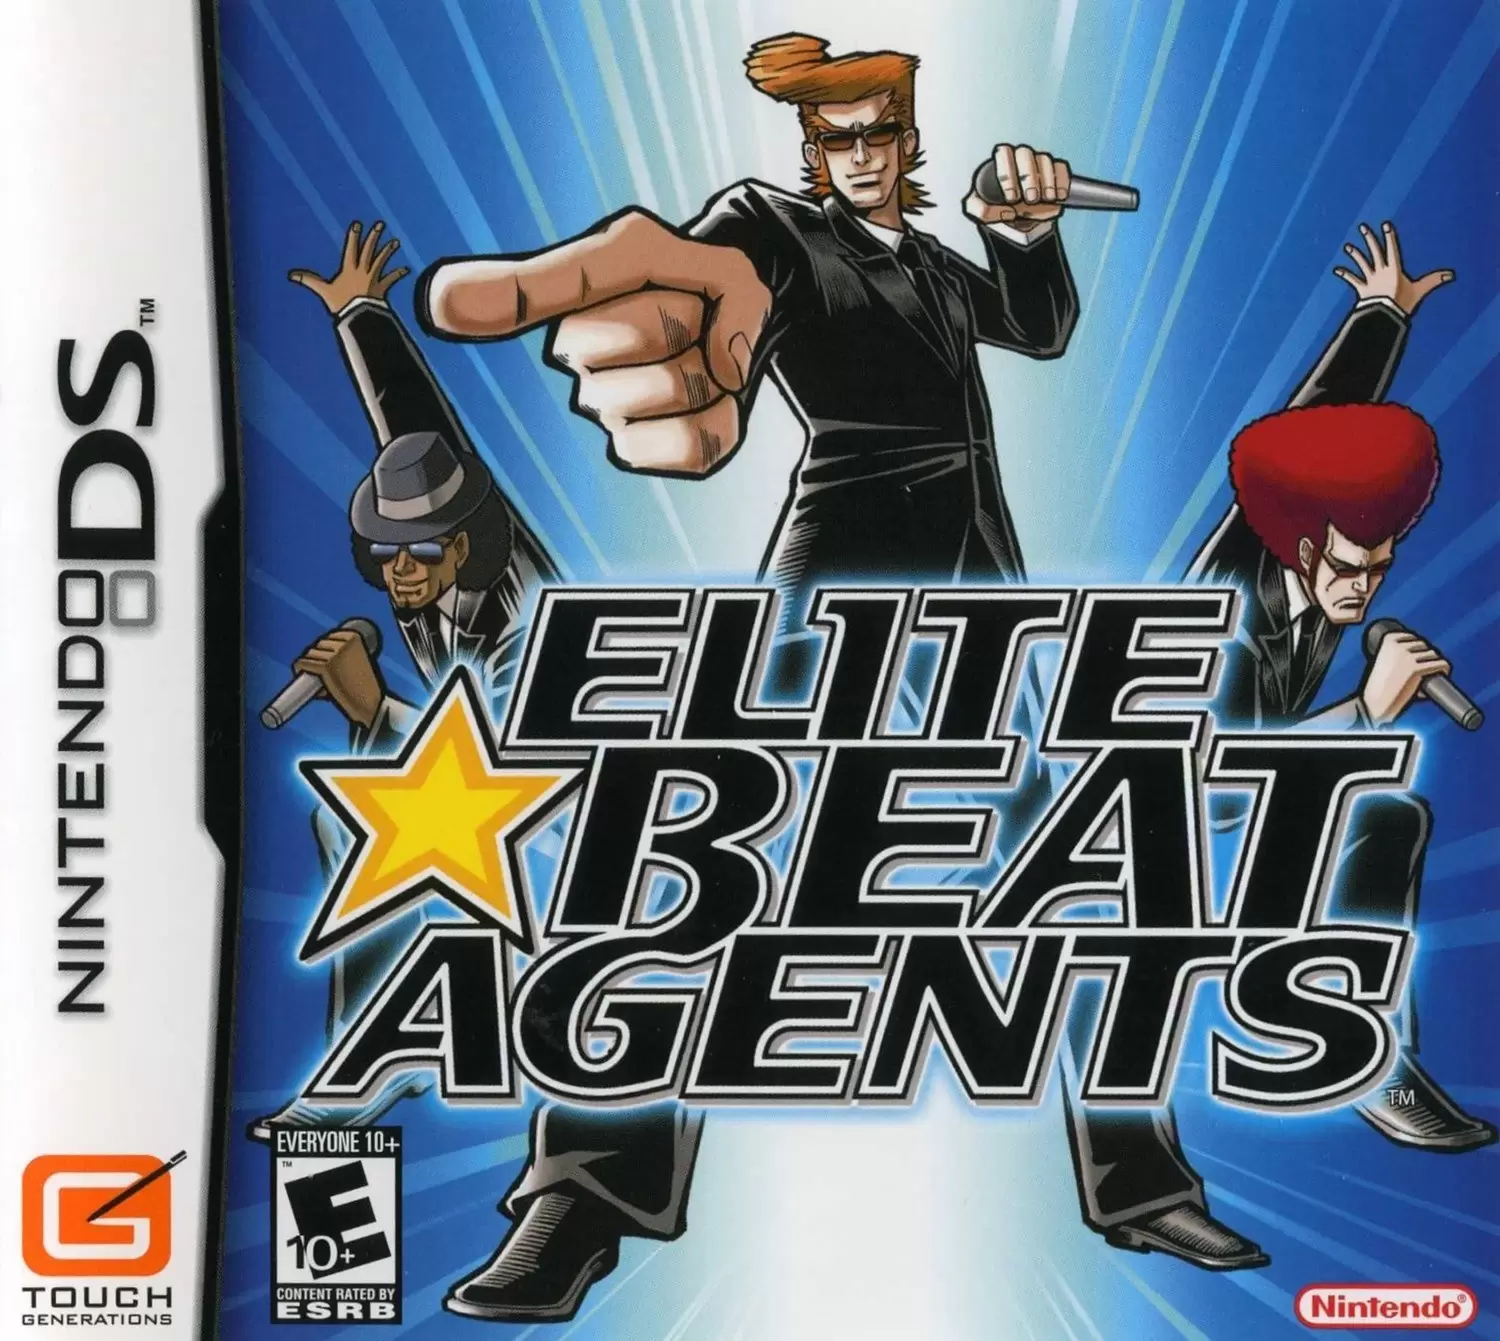 Nintendo DS Games - Elite Beat Agents